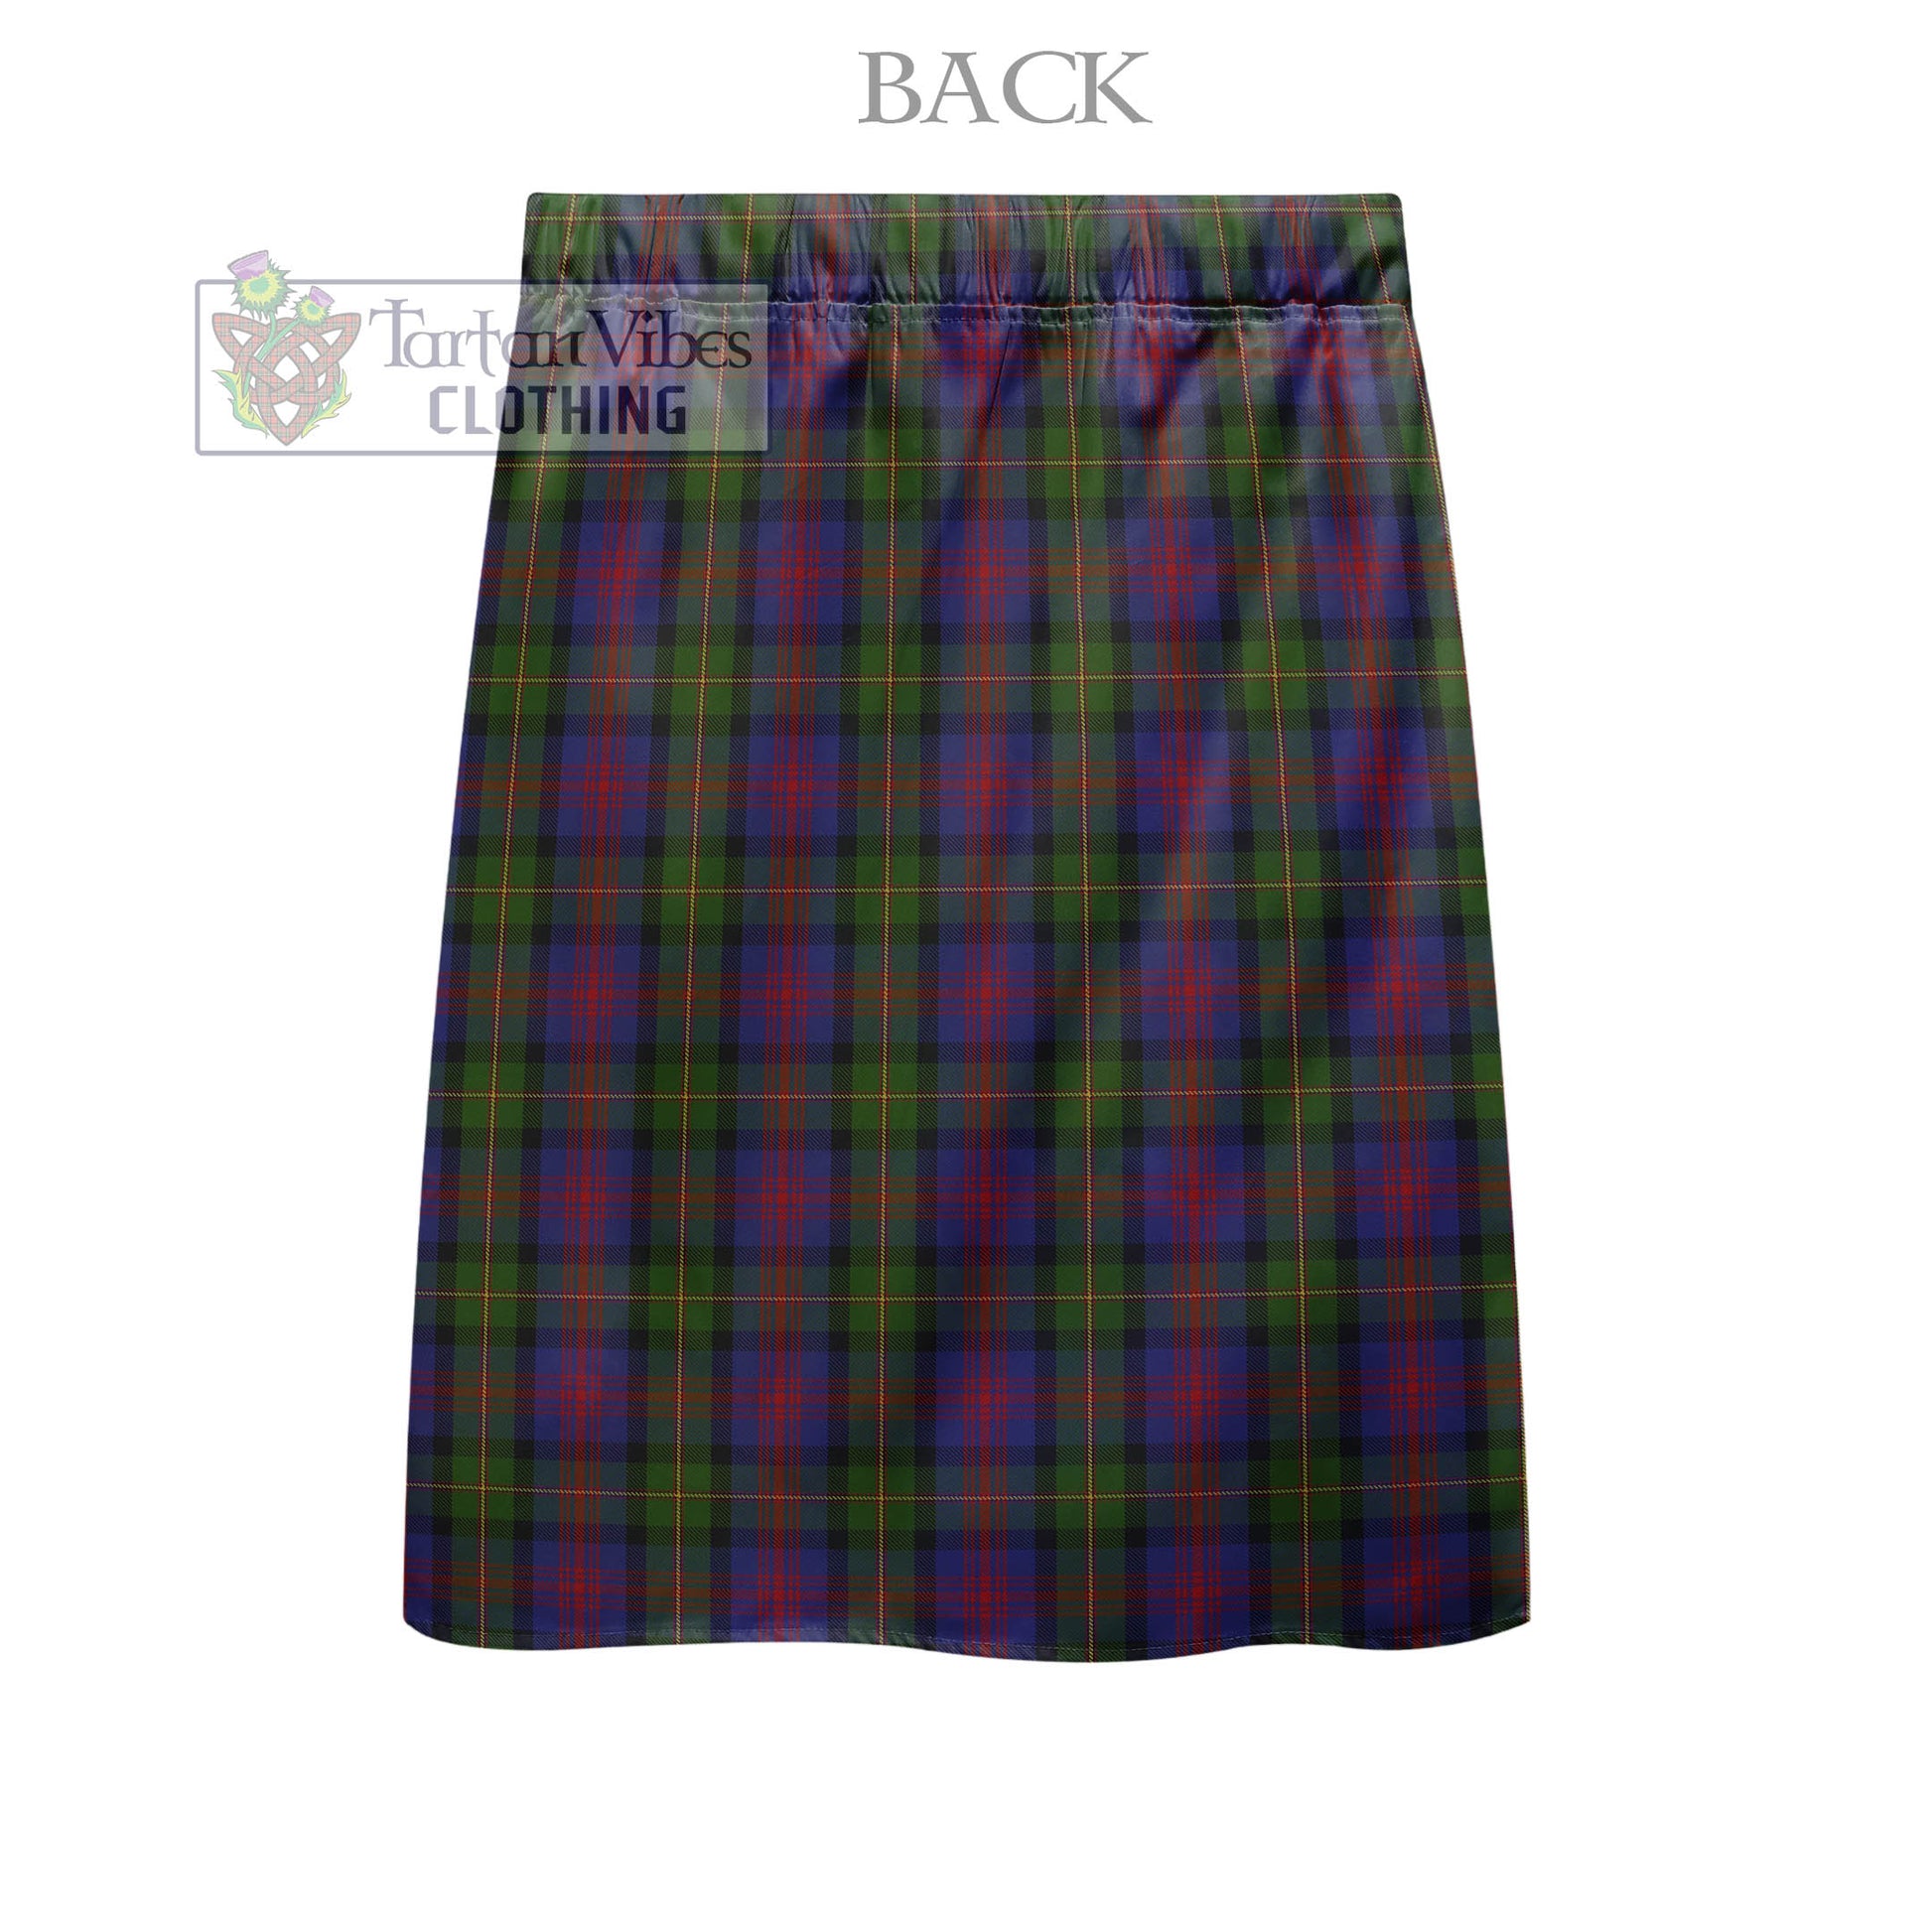 Tartan Vibes Clothing MacLennan Tartan Men's Pleated Skirt - Fashion Casual Retro Scottish Style